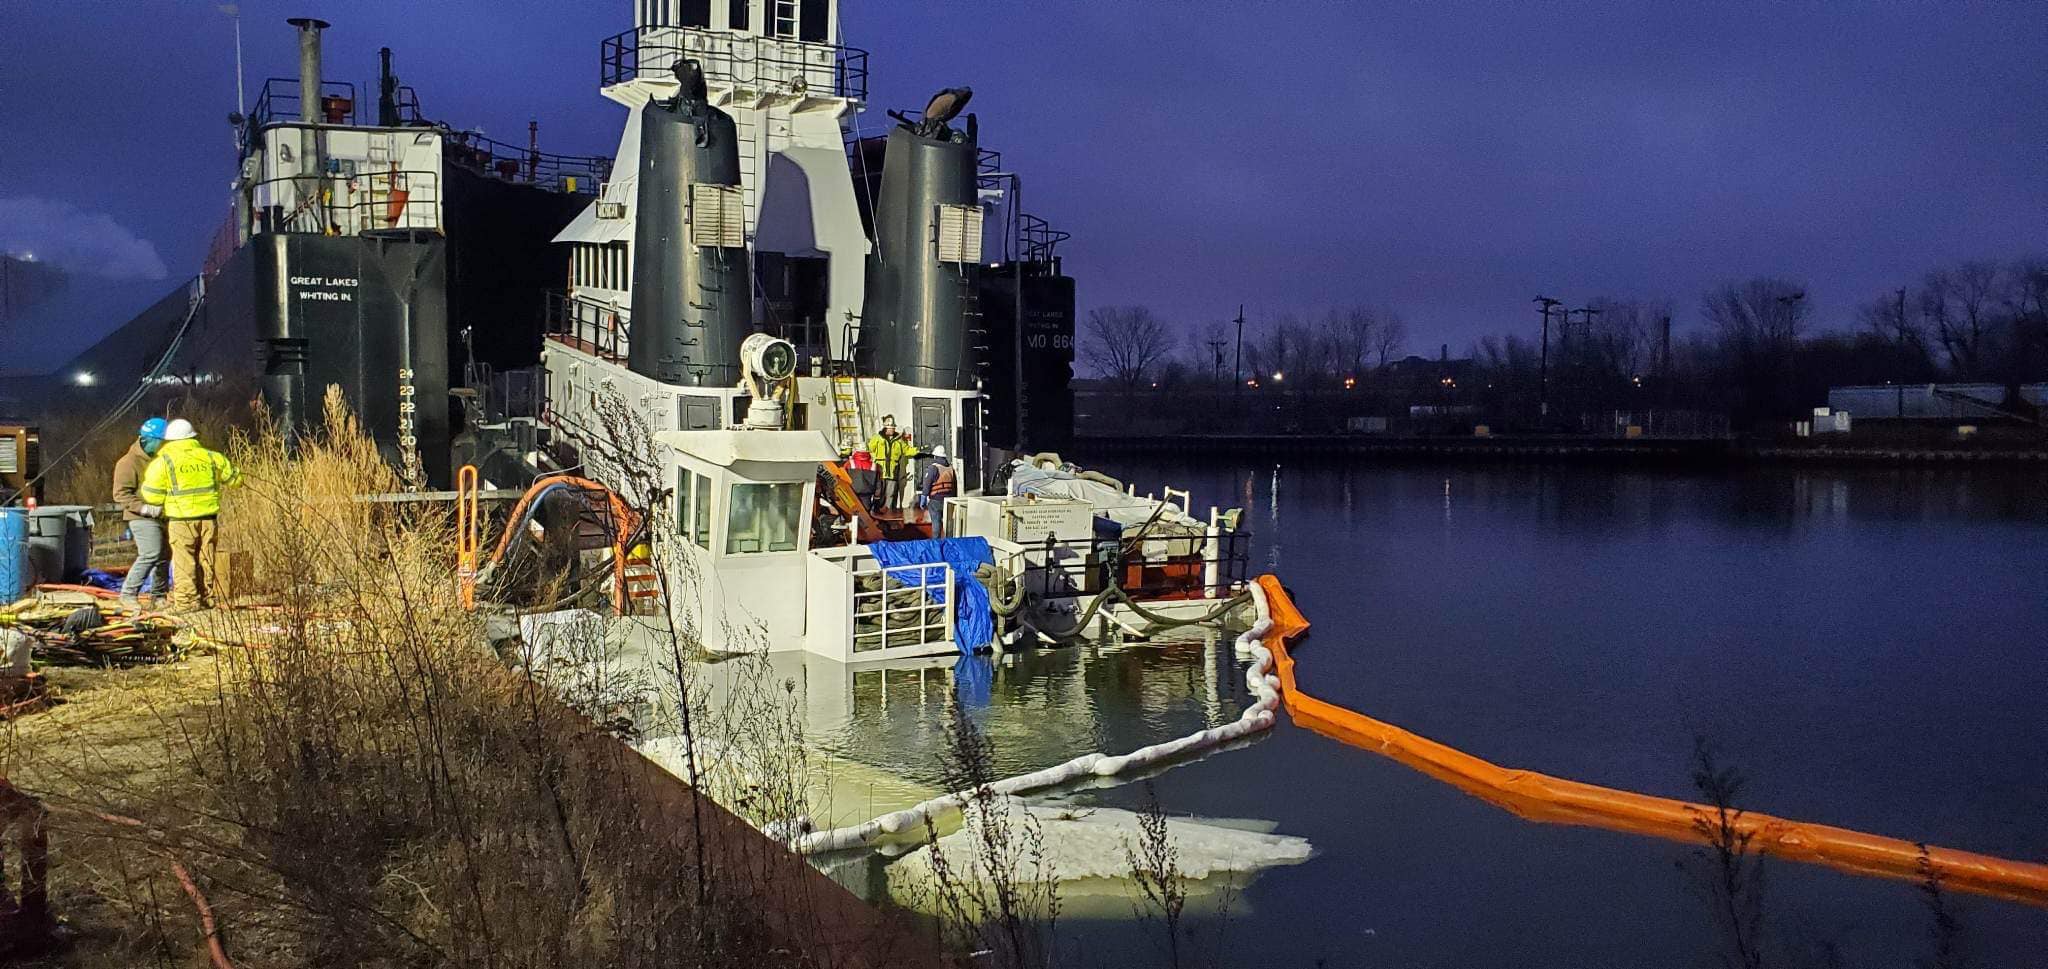 Efforts Underway to Refloat Towing Vessel in Port of Milwaukee